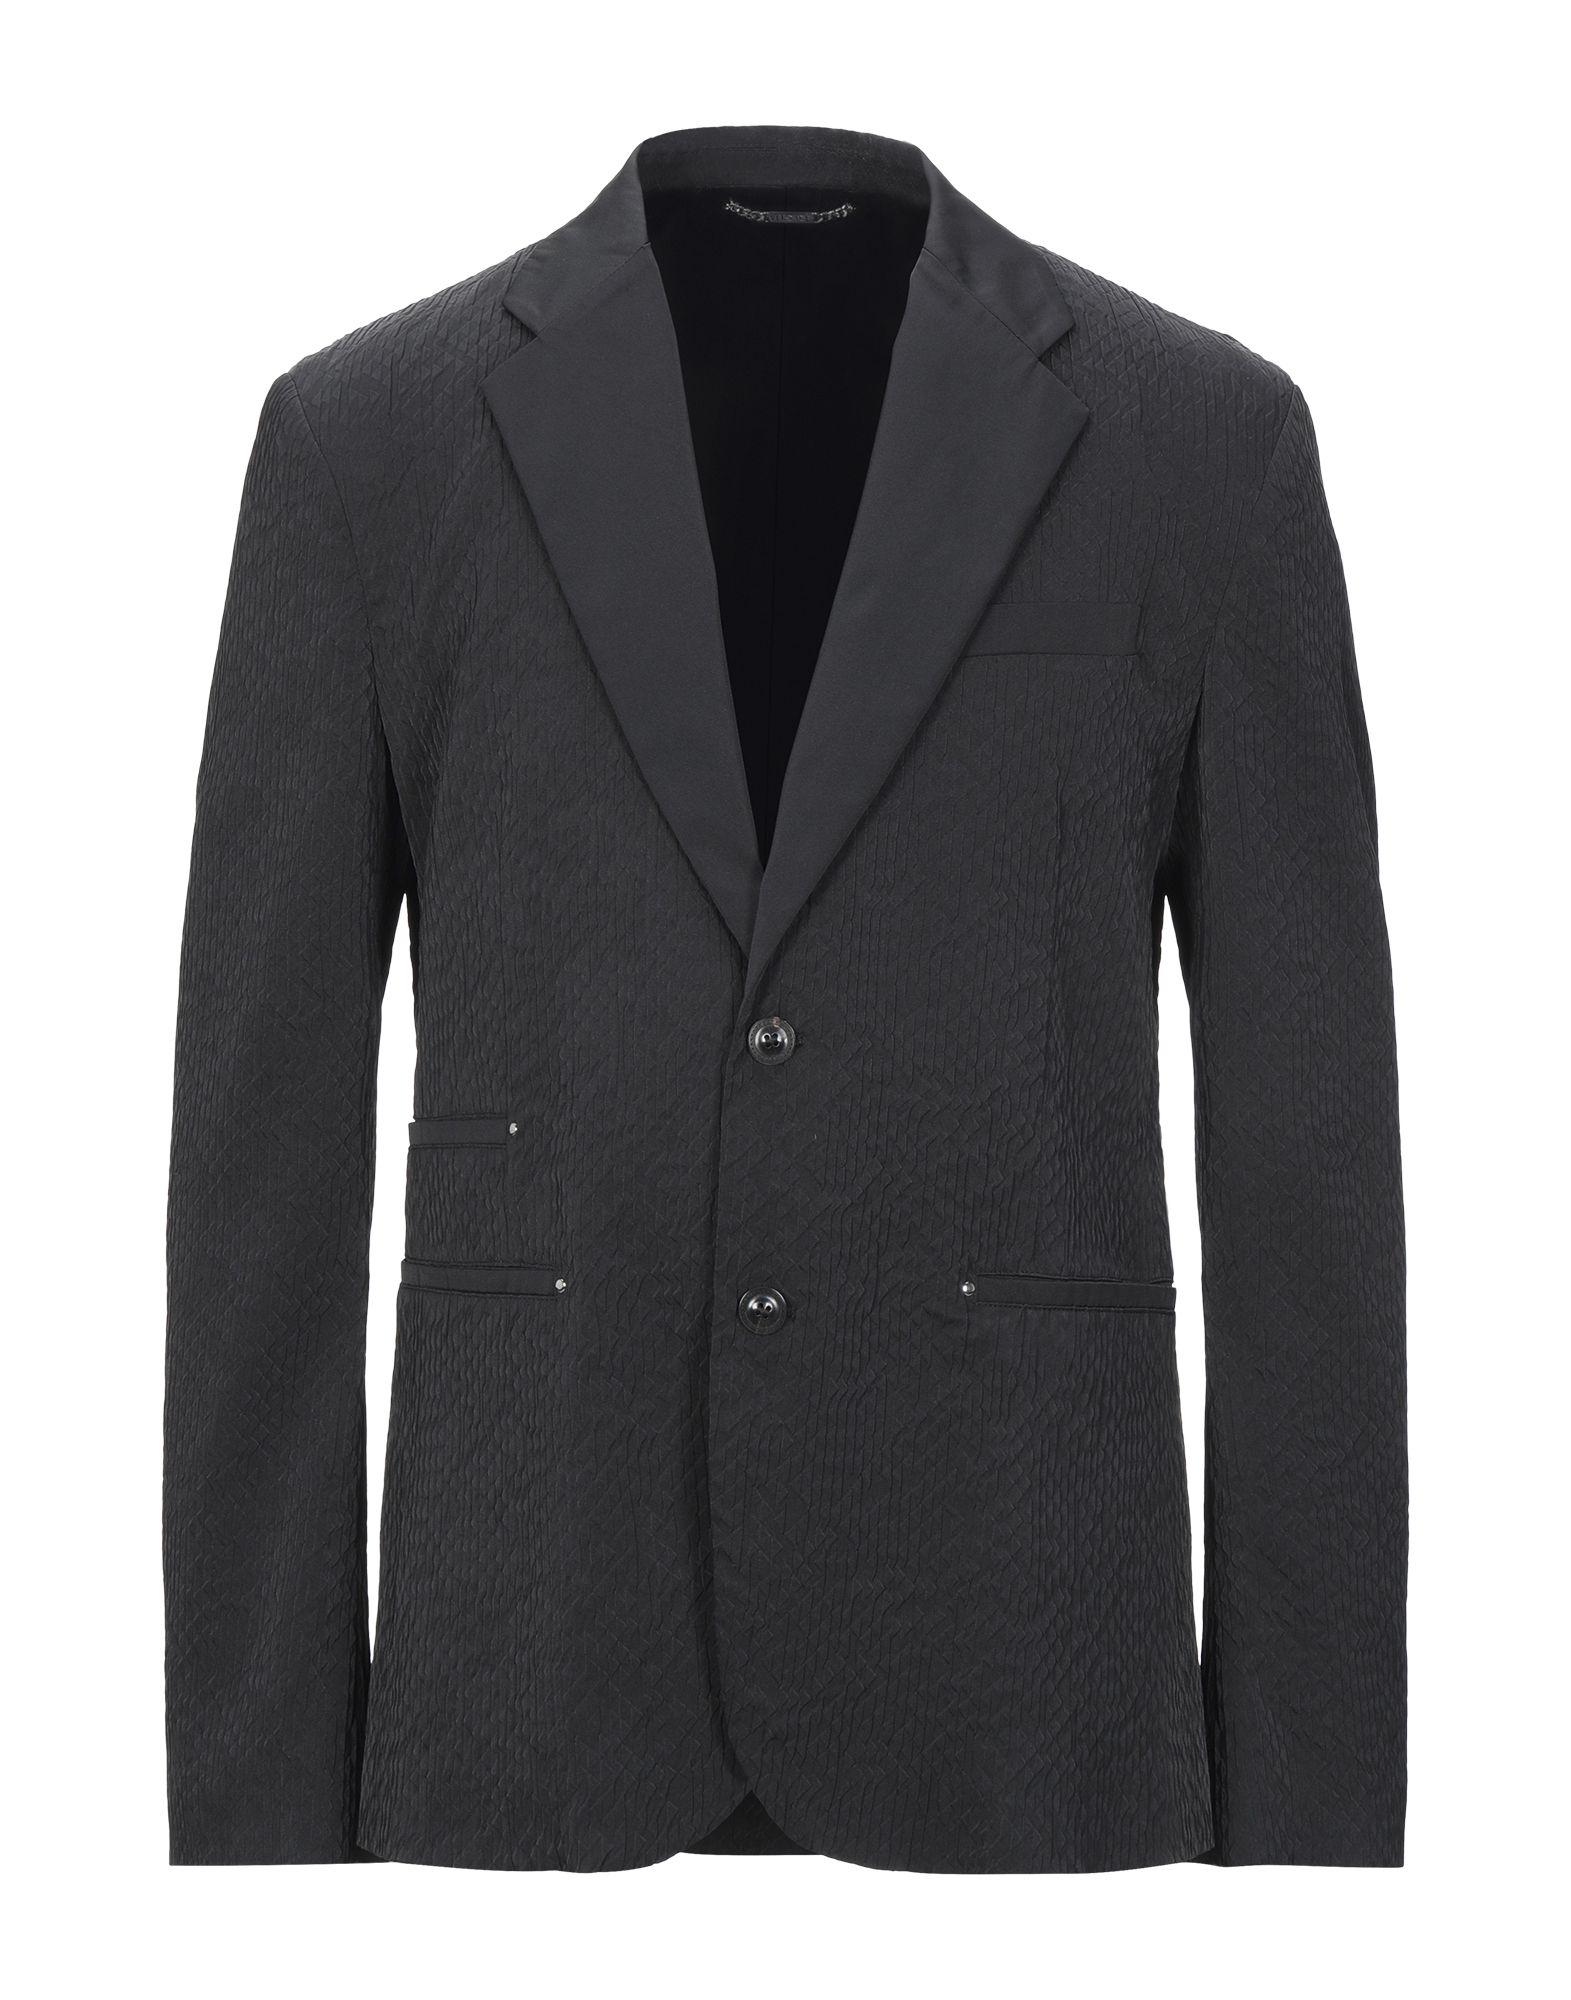 Versace Satin Suit Jacket in Black for Men - Lyst